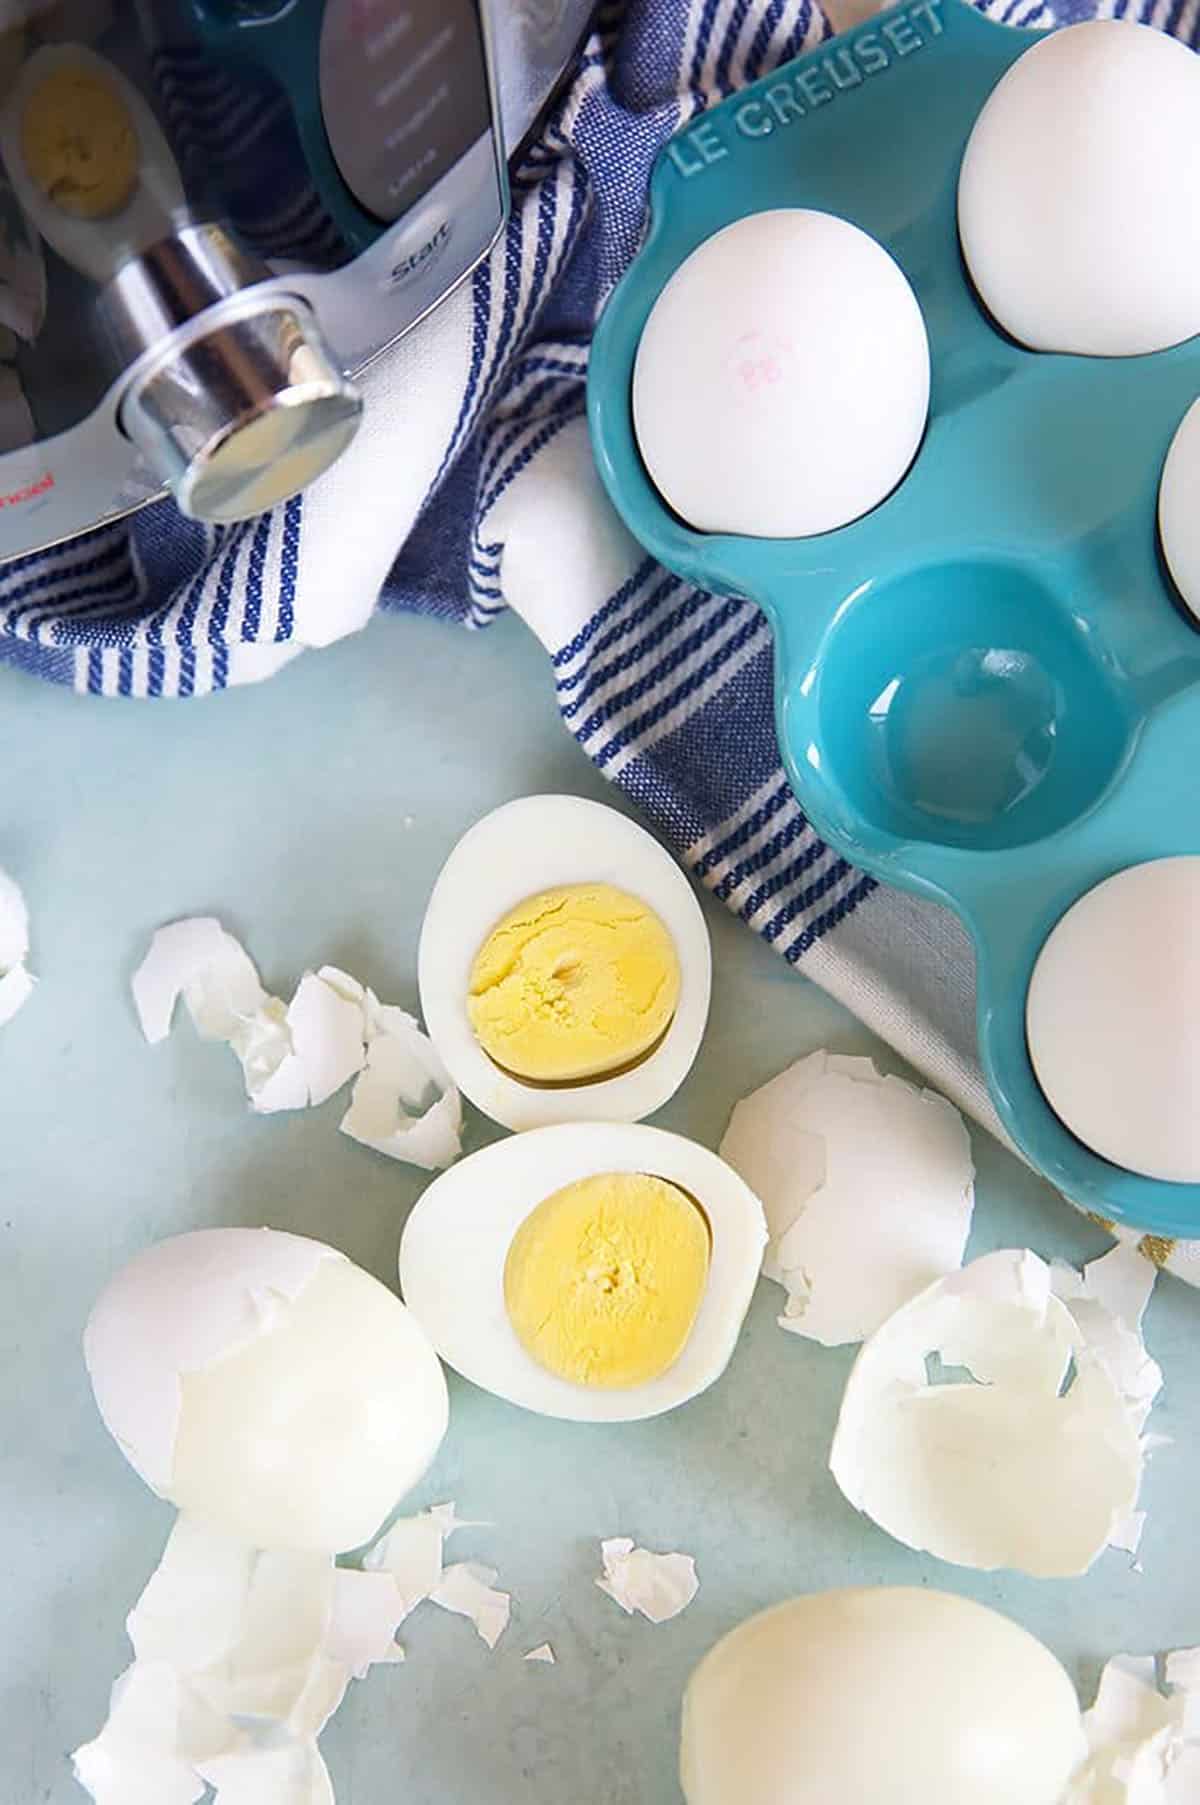 Healthy Egg Bites Recipe : My Crazy Good Life